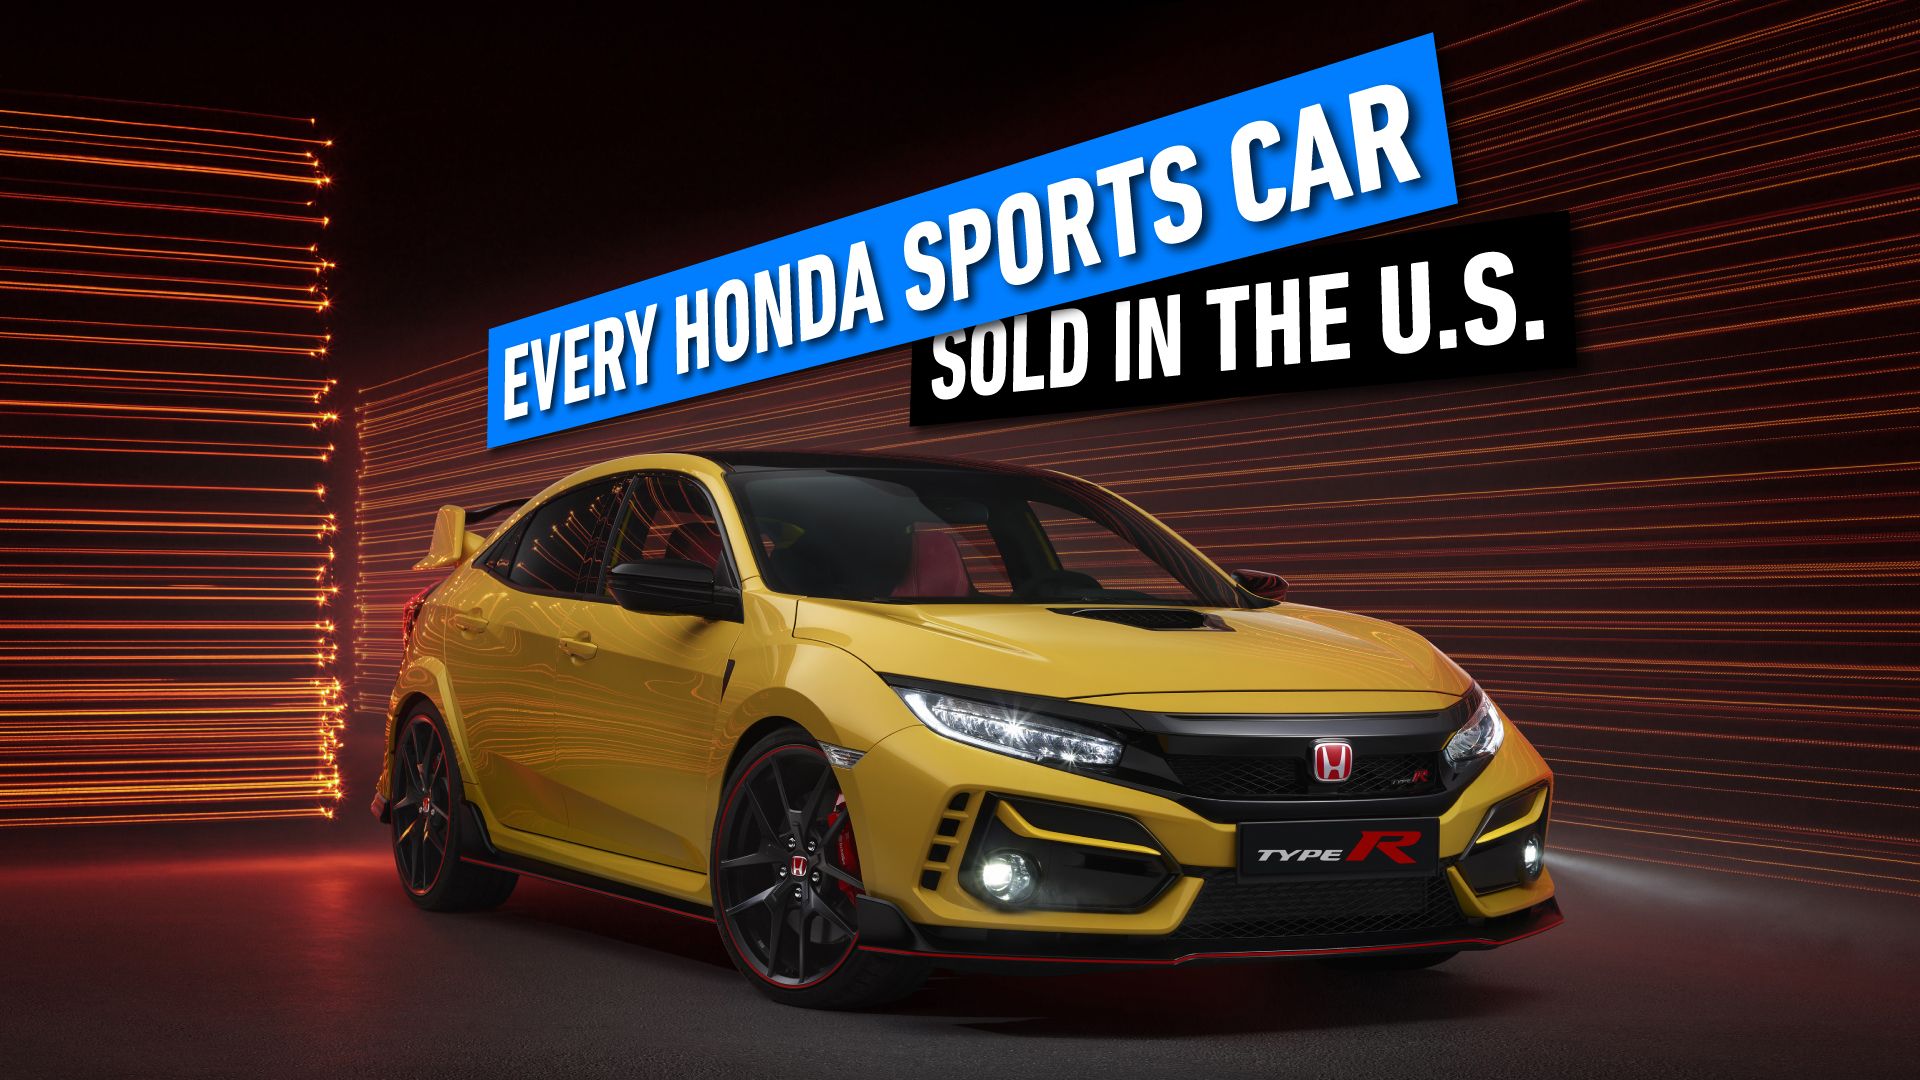 Every-Honda-Sports-Car-Sold-In-The-U.S.